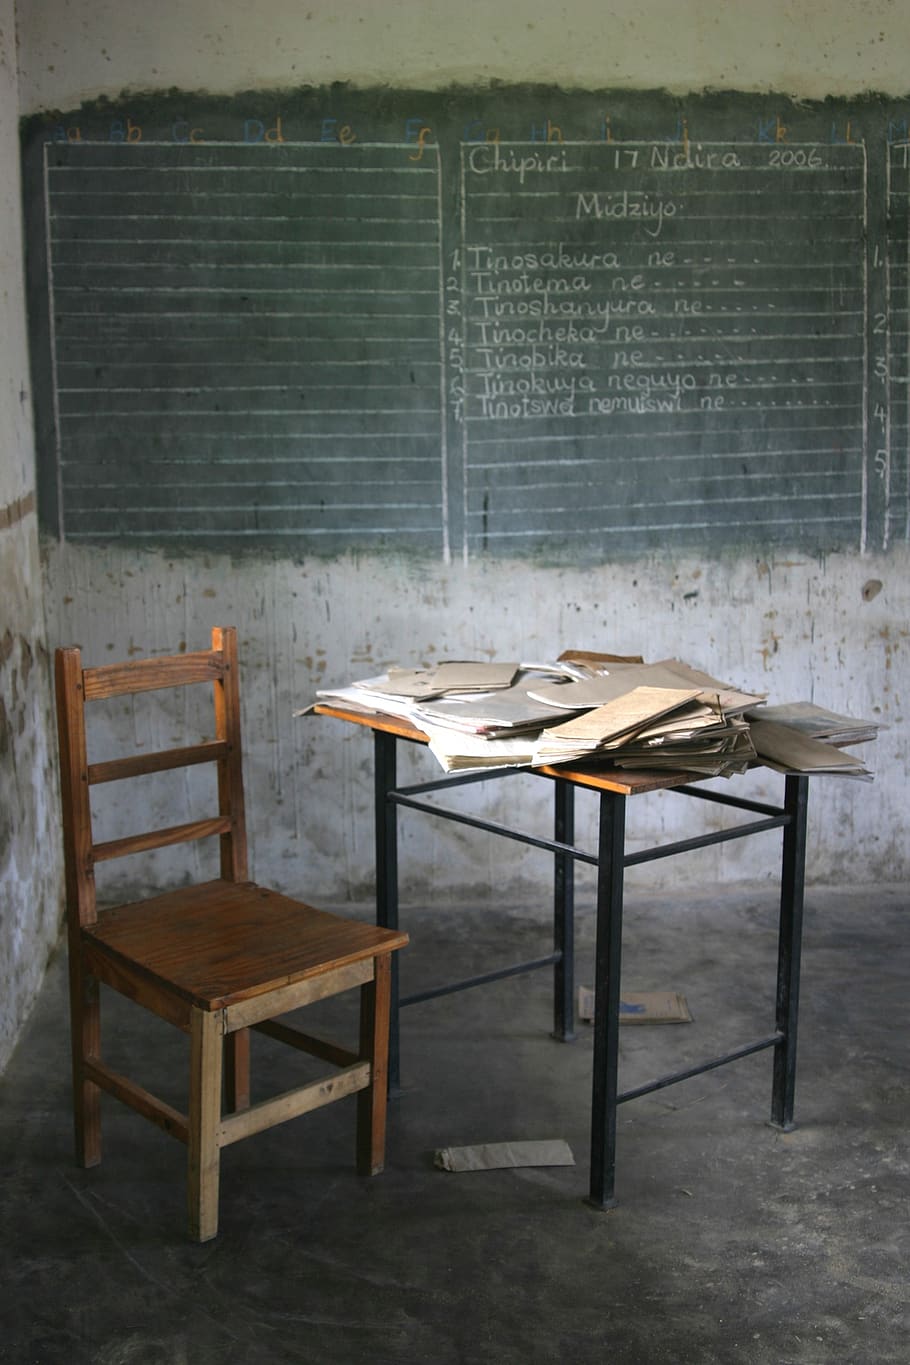 afrika, di kelas, sekolah, papan tulis, kursi, meja, ketiadaan, mebel, dalam ruangan, bahan kayu